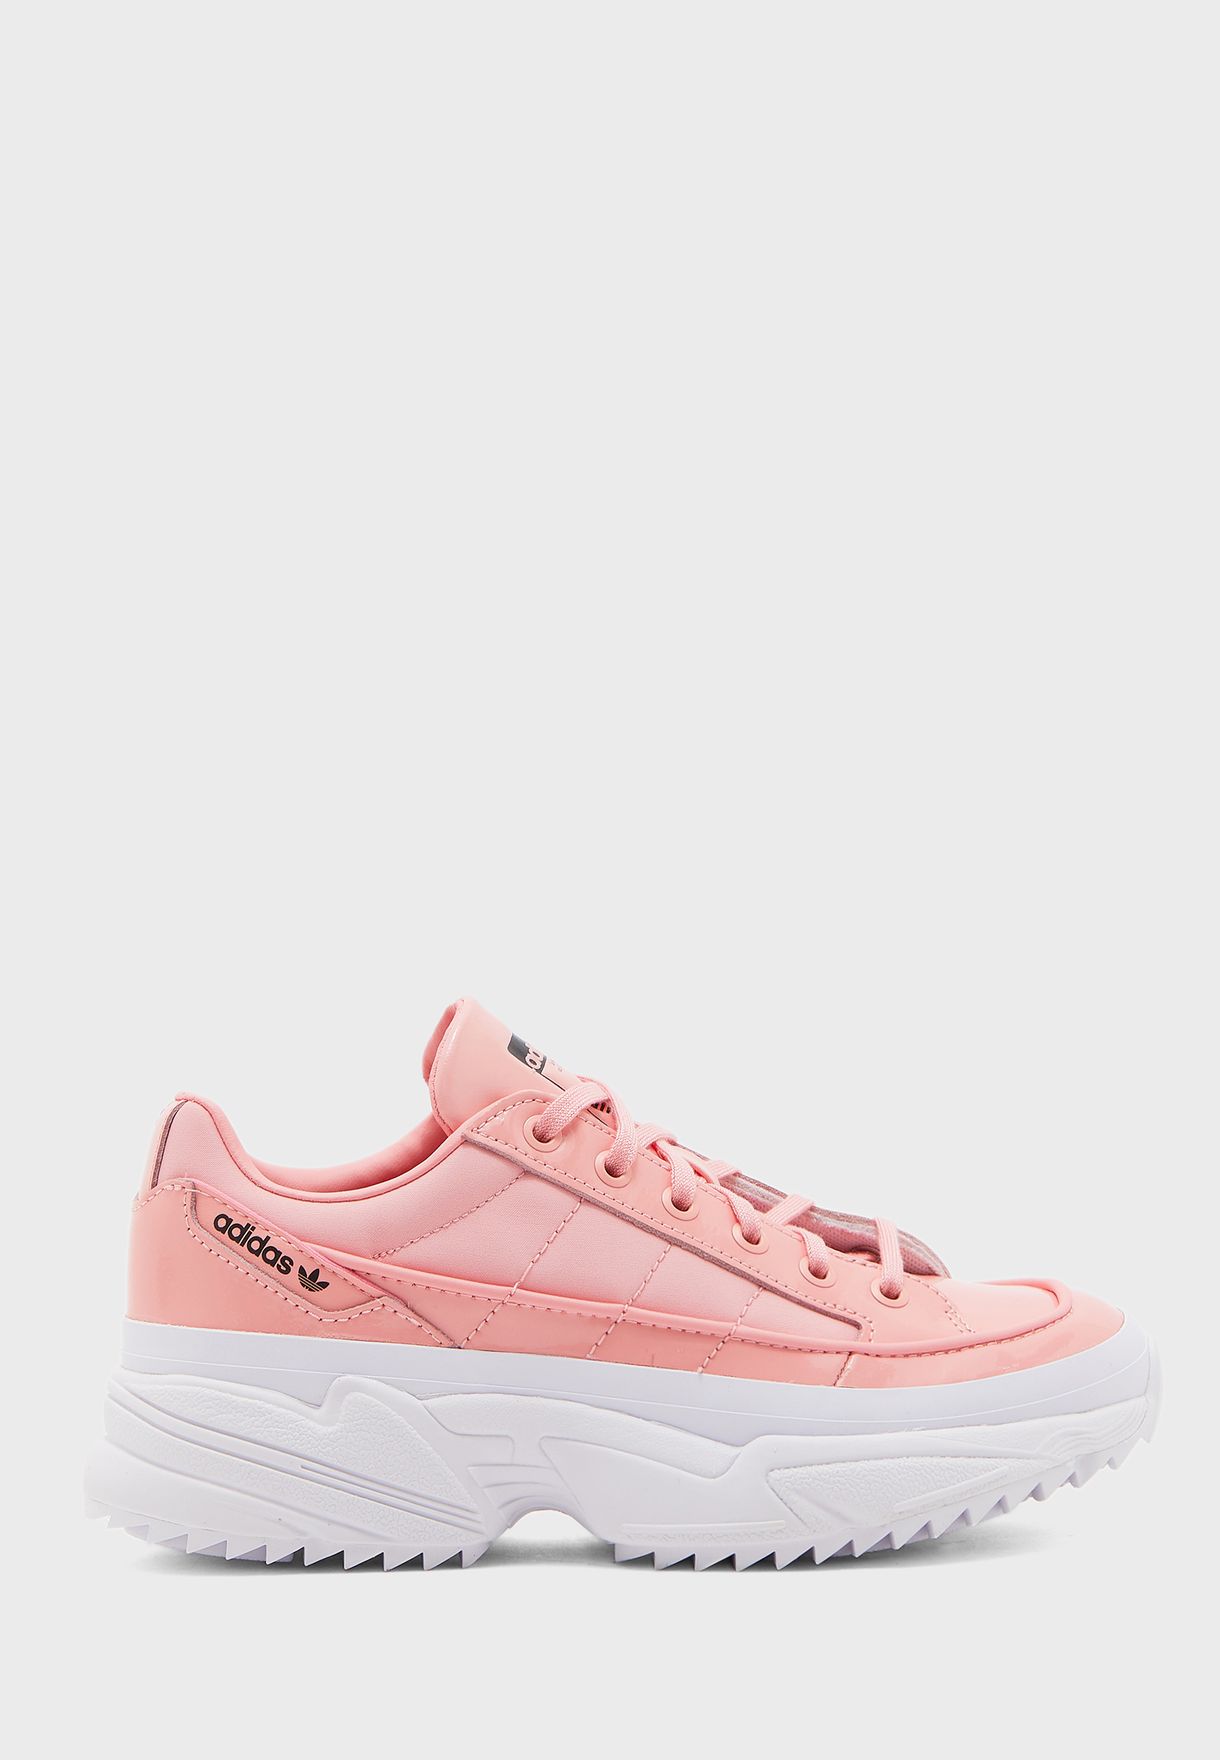 adidas originals pink shoes